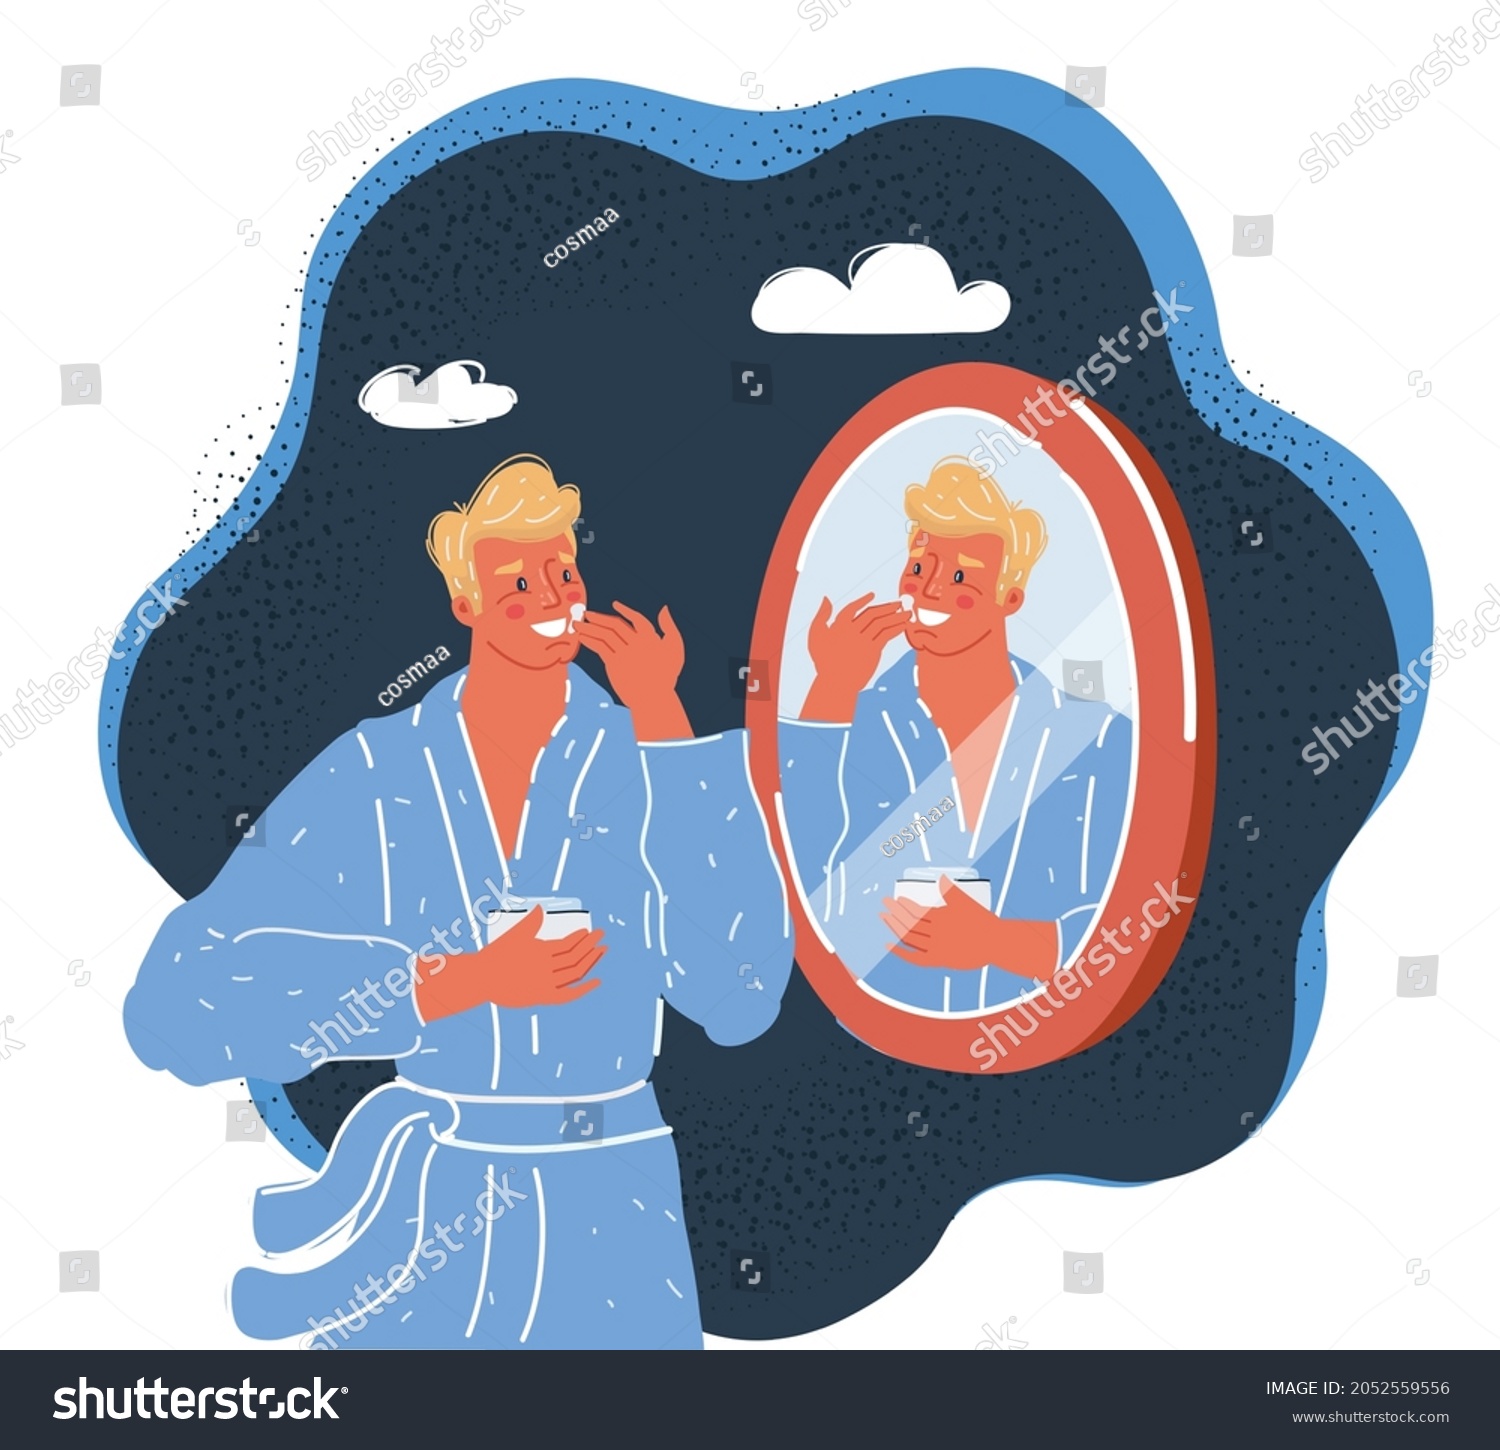 SVG of Cartoon vector illustration of man take care about him skin before mirror on dark backround. svg